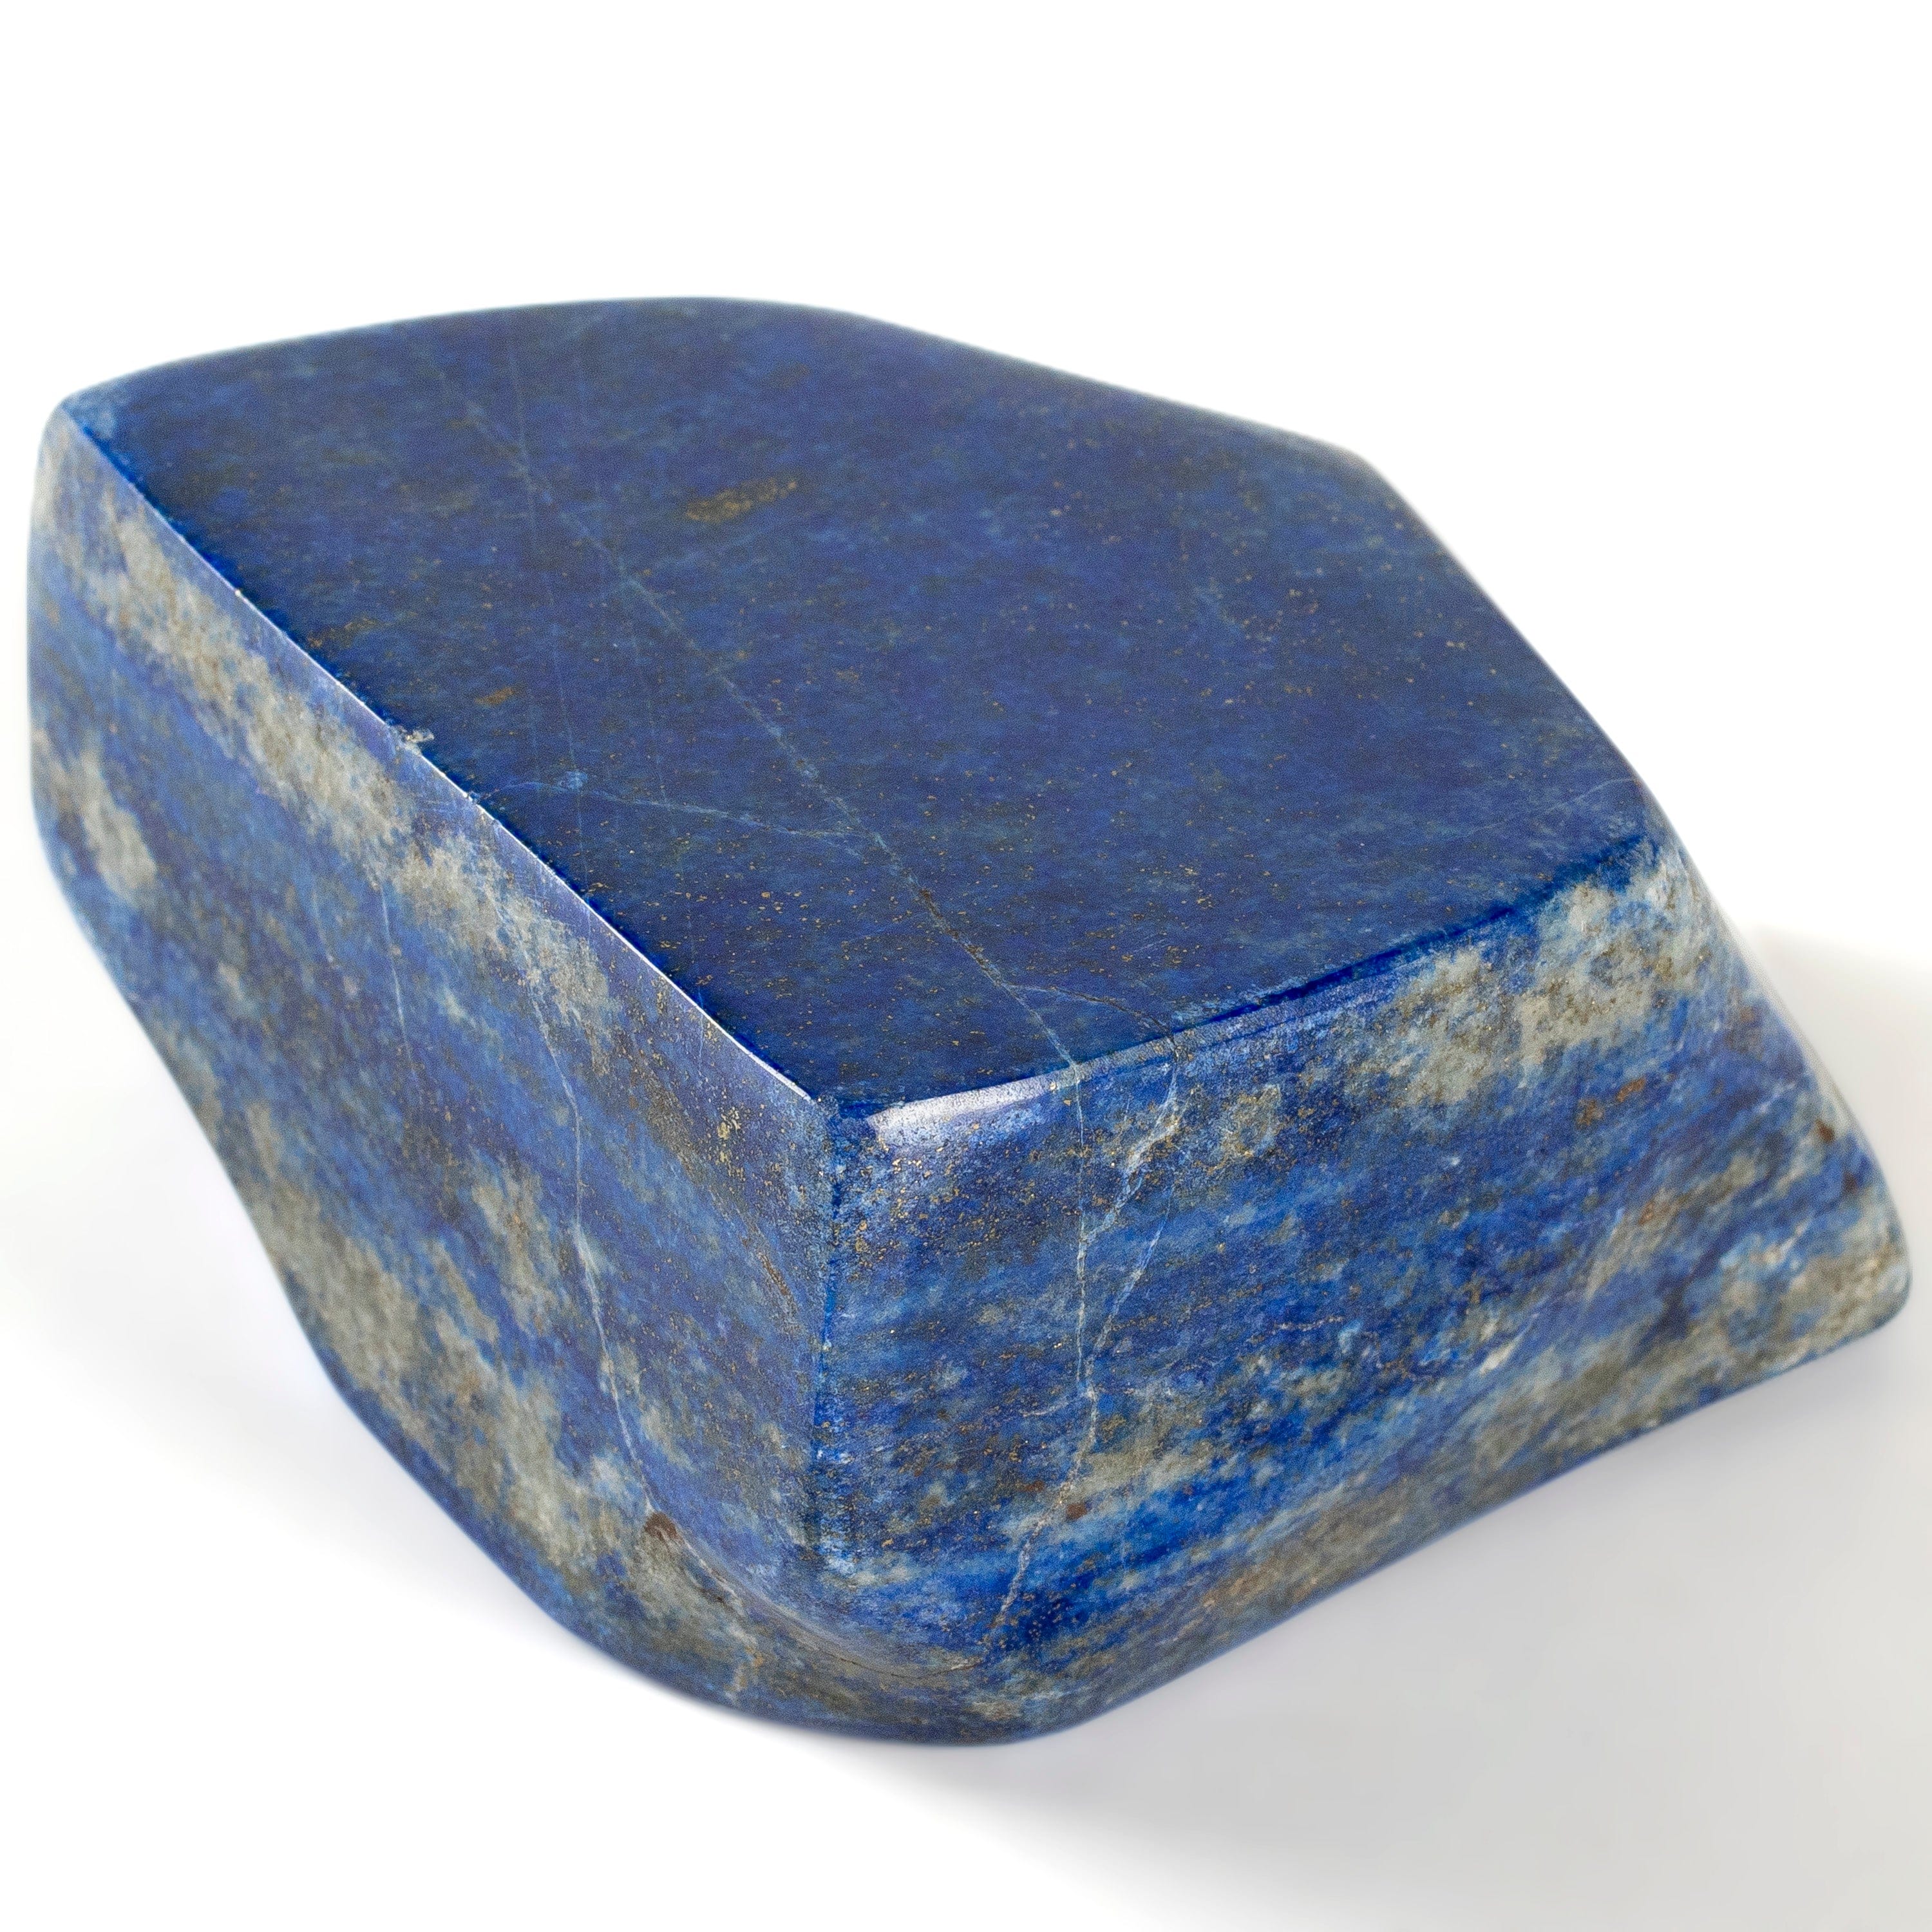 Kalifano Lapis Lapis Lazuli Freeform from Afghanistan - 3.5" / 925 grams LP950.001